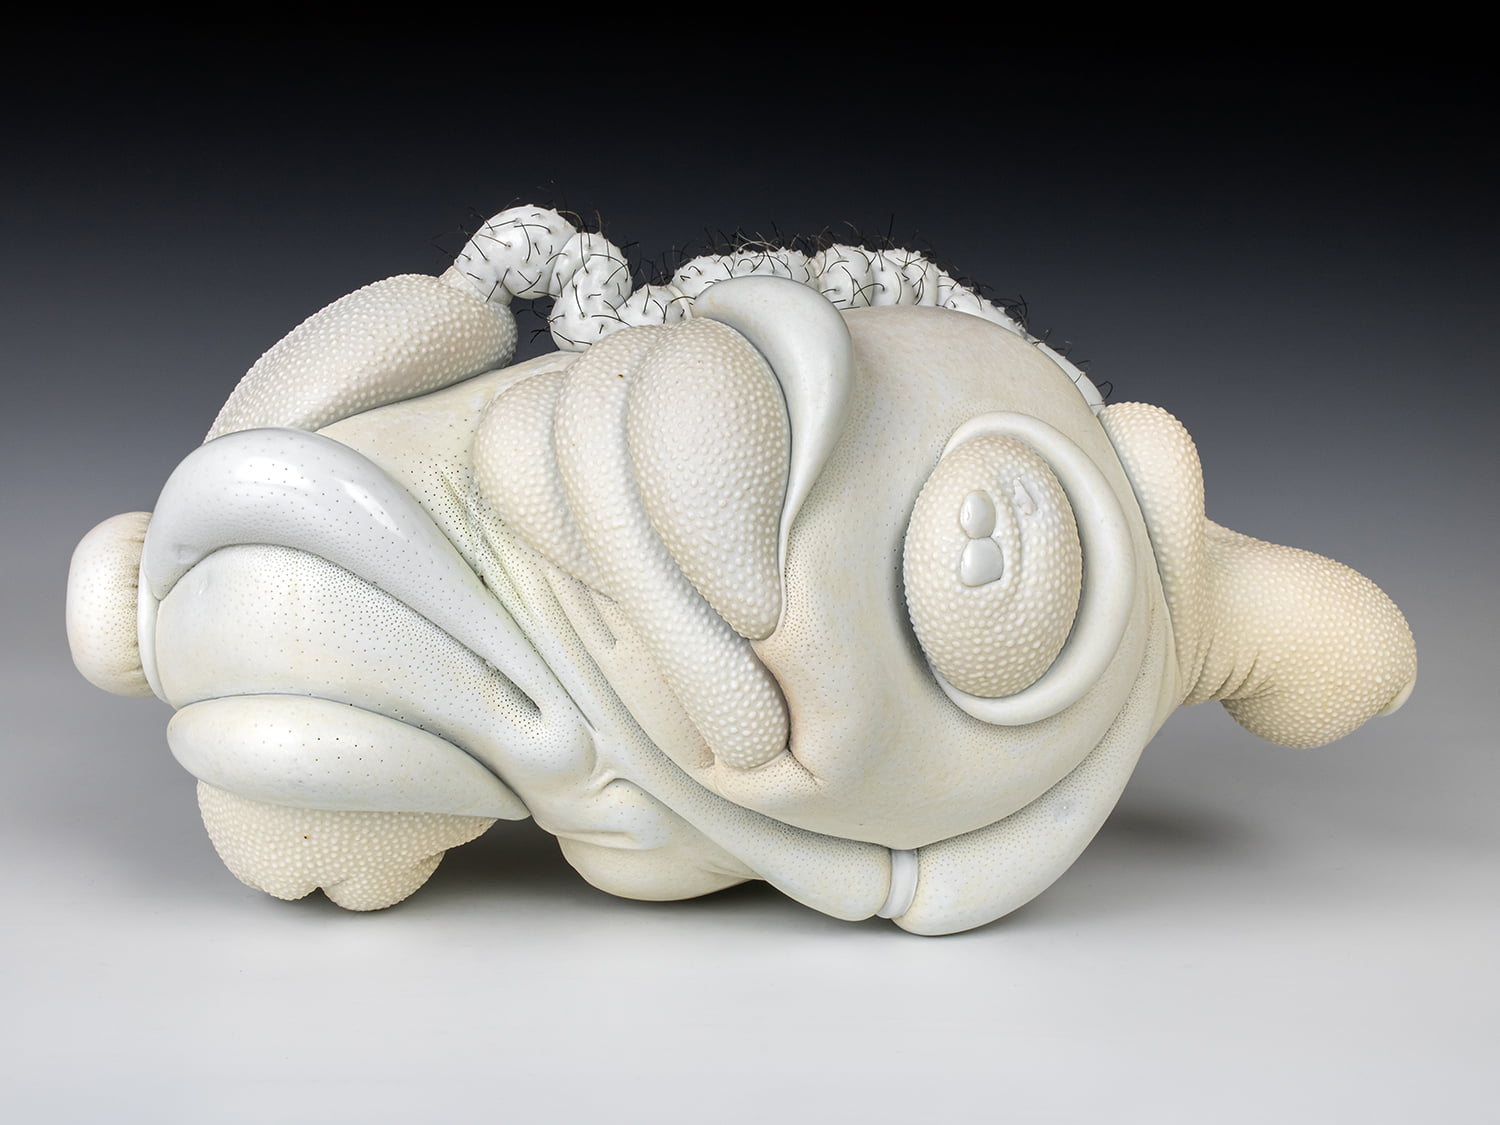 Jason Briggs "Ventura" (alternate view). porcelain and mixed media sculpture ceramics.